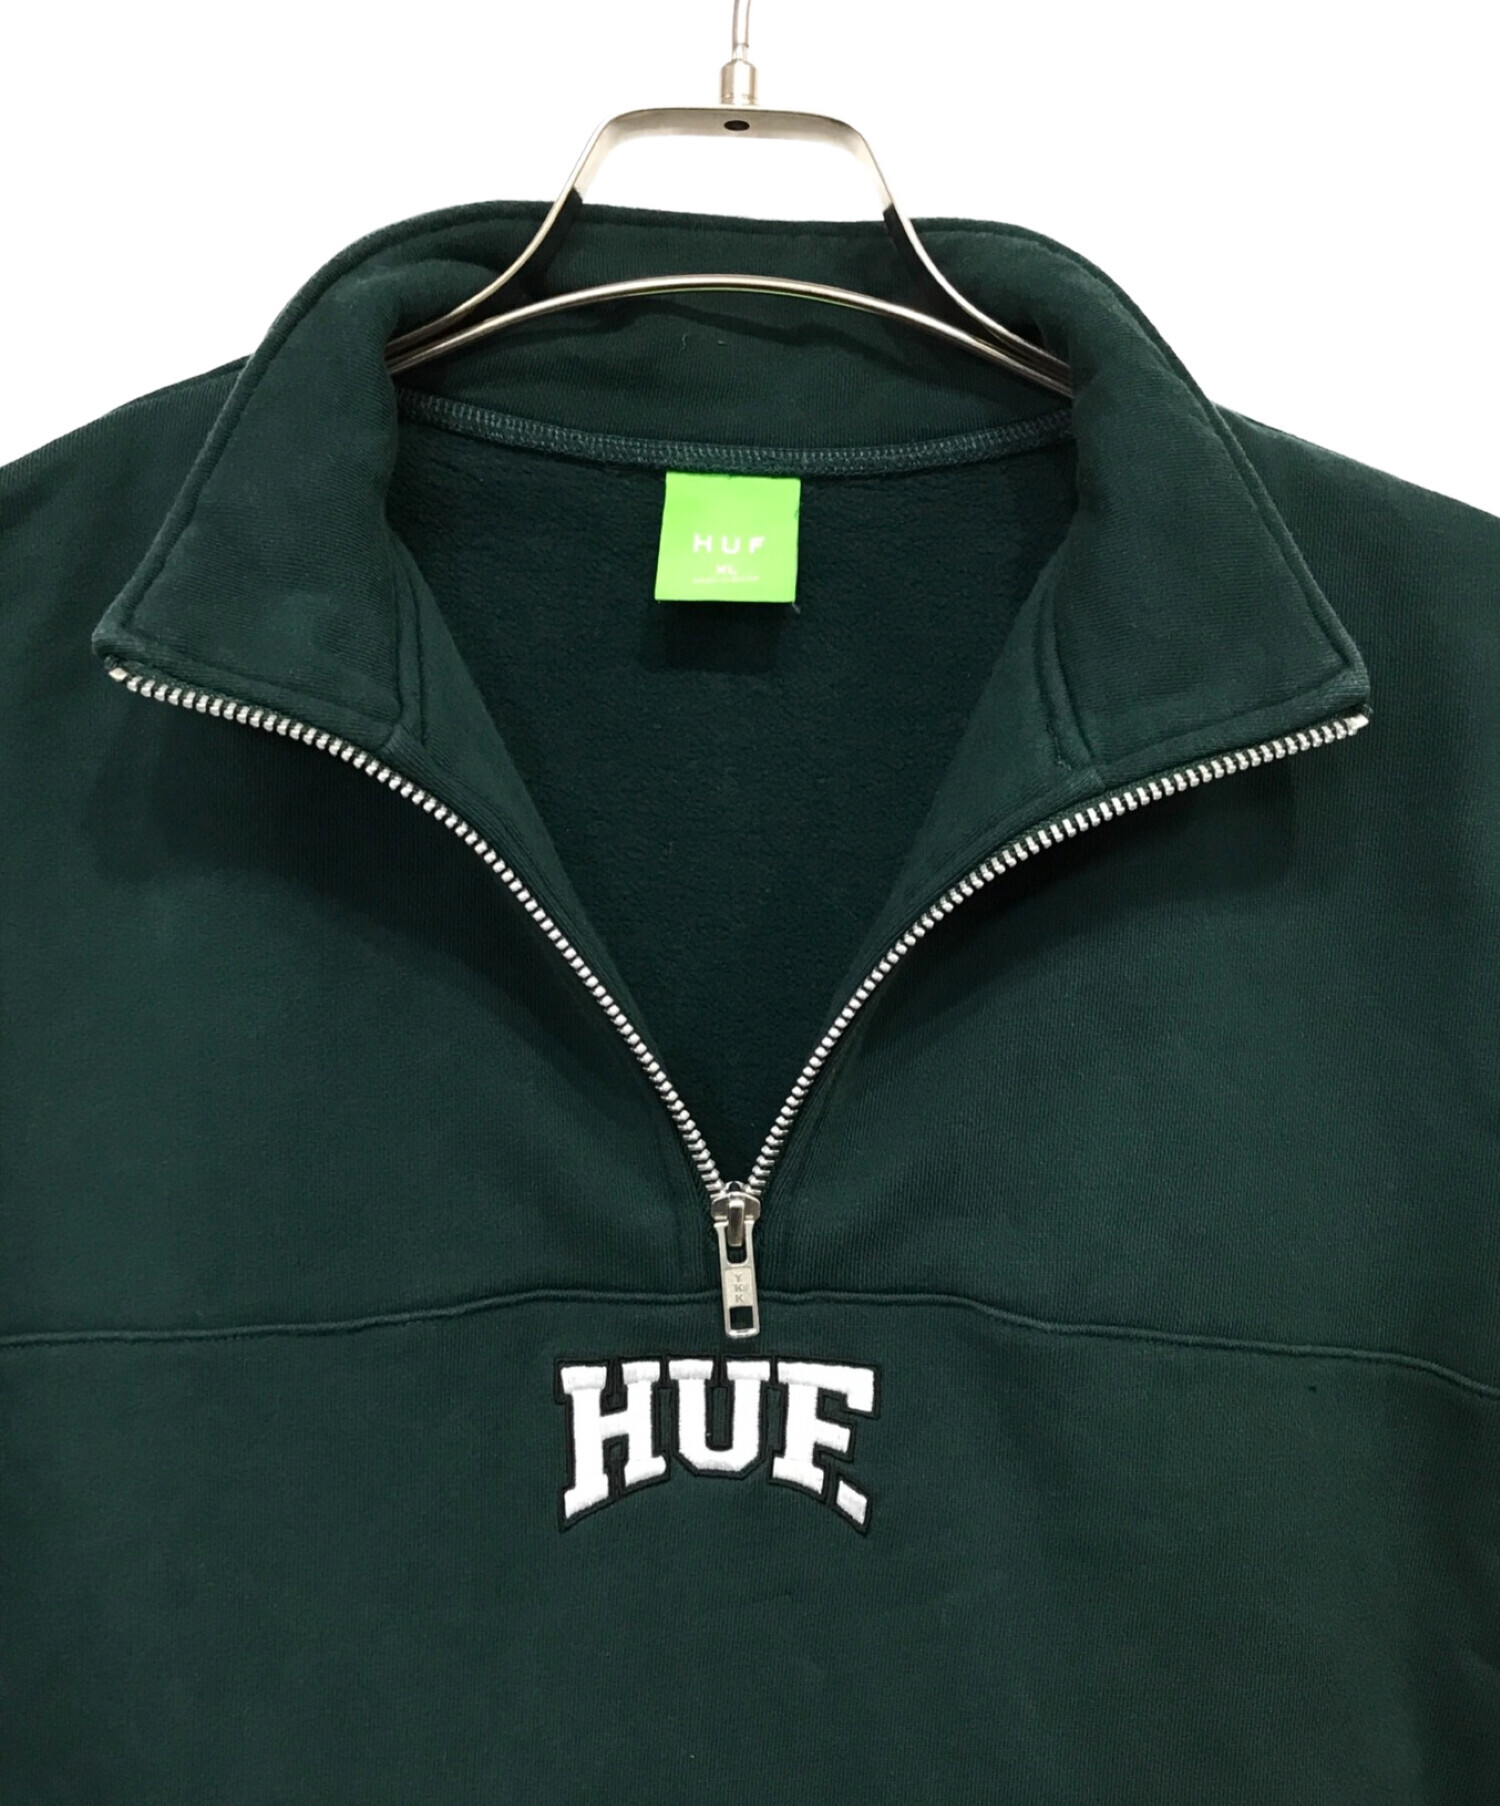 HUF (ハフ) ハーフジップロゴスウェット グリーン サイズ:XL